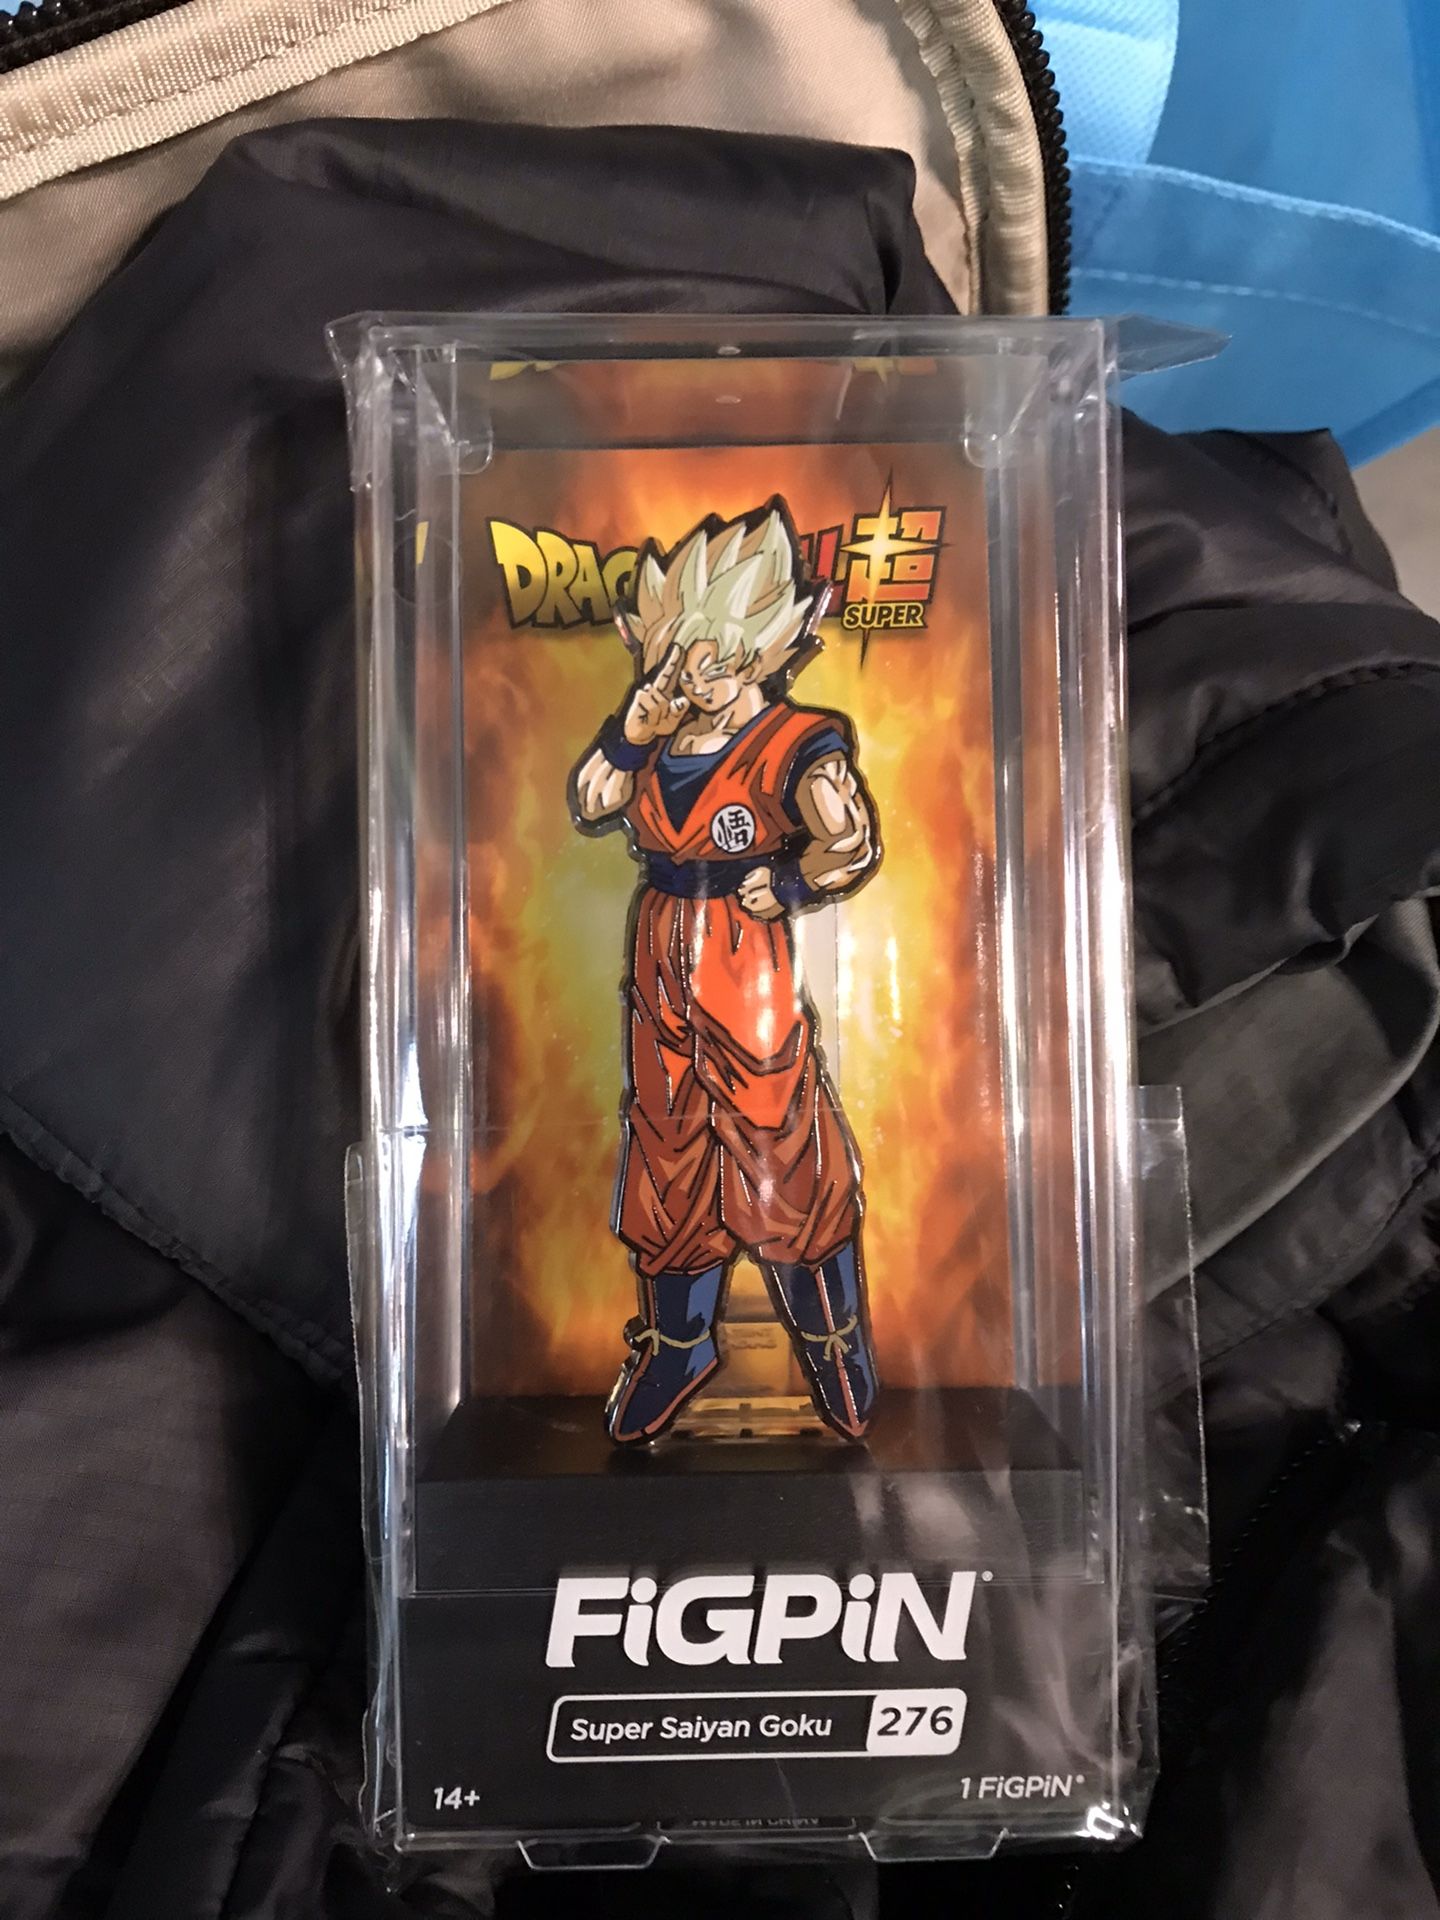 FiGPiN Dragonball Z Super Saiyan Goku NYCC Exclusive 1 of 1000 Limited